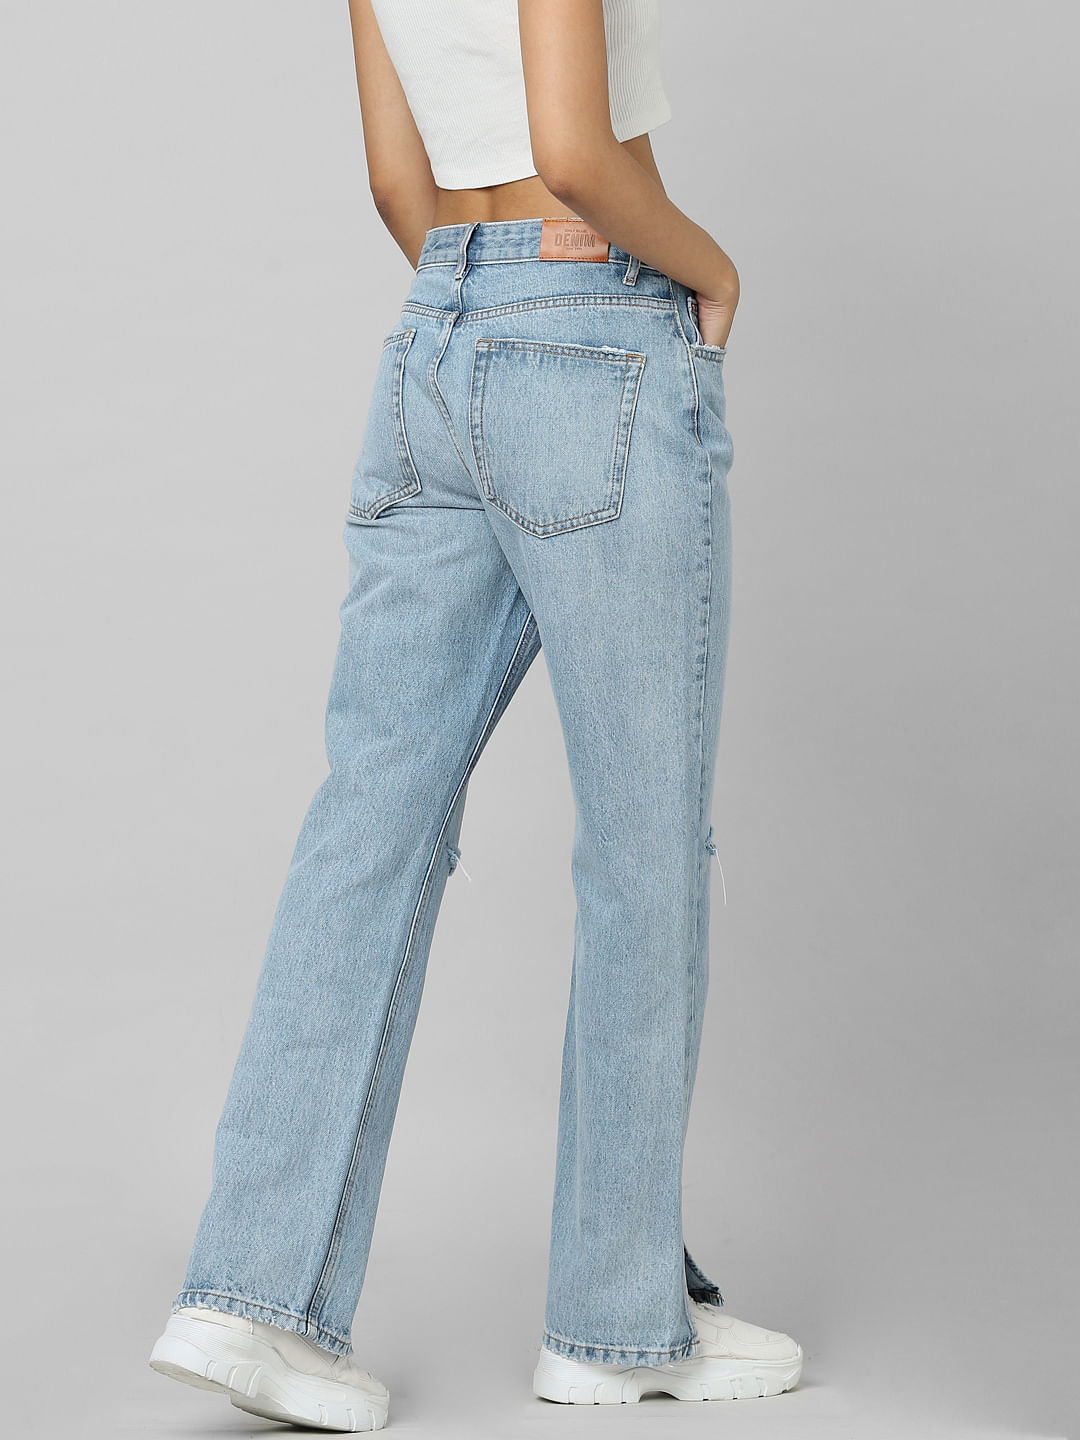 Silver Jeans Co. Gordie Loose Fit Light Wash Jeans | Dillard's